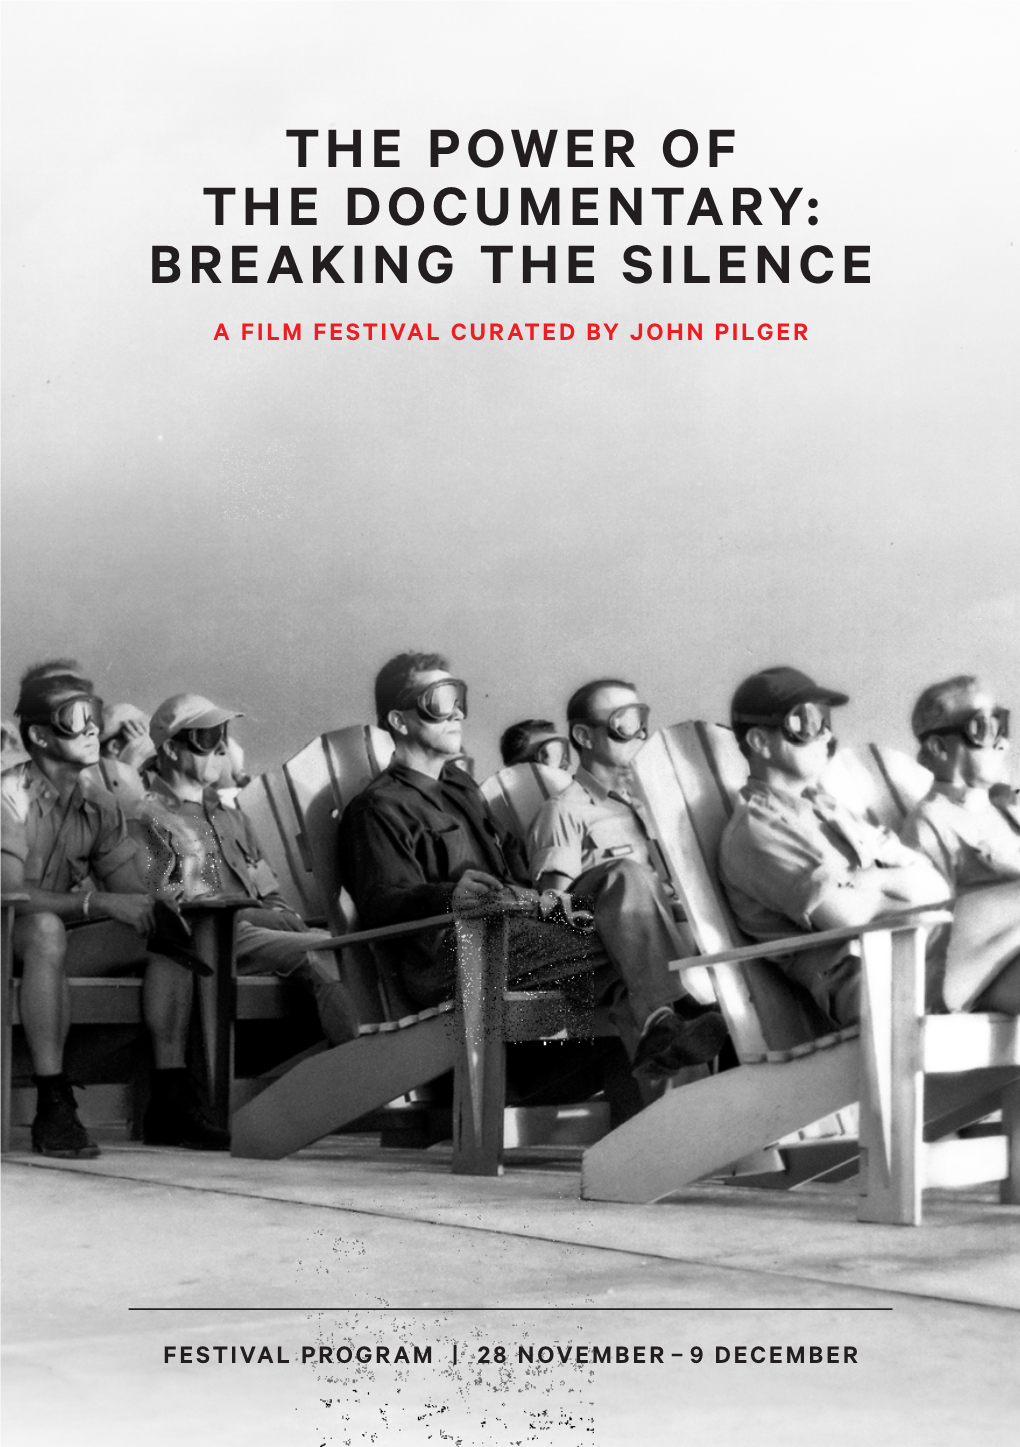 The Power of the Documentary: Breaking the Silence Full Program Download